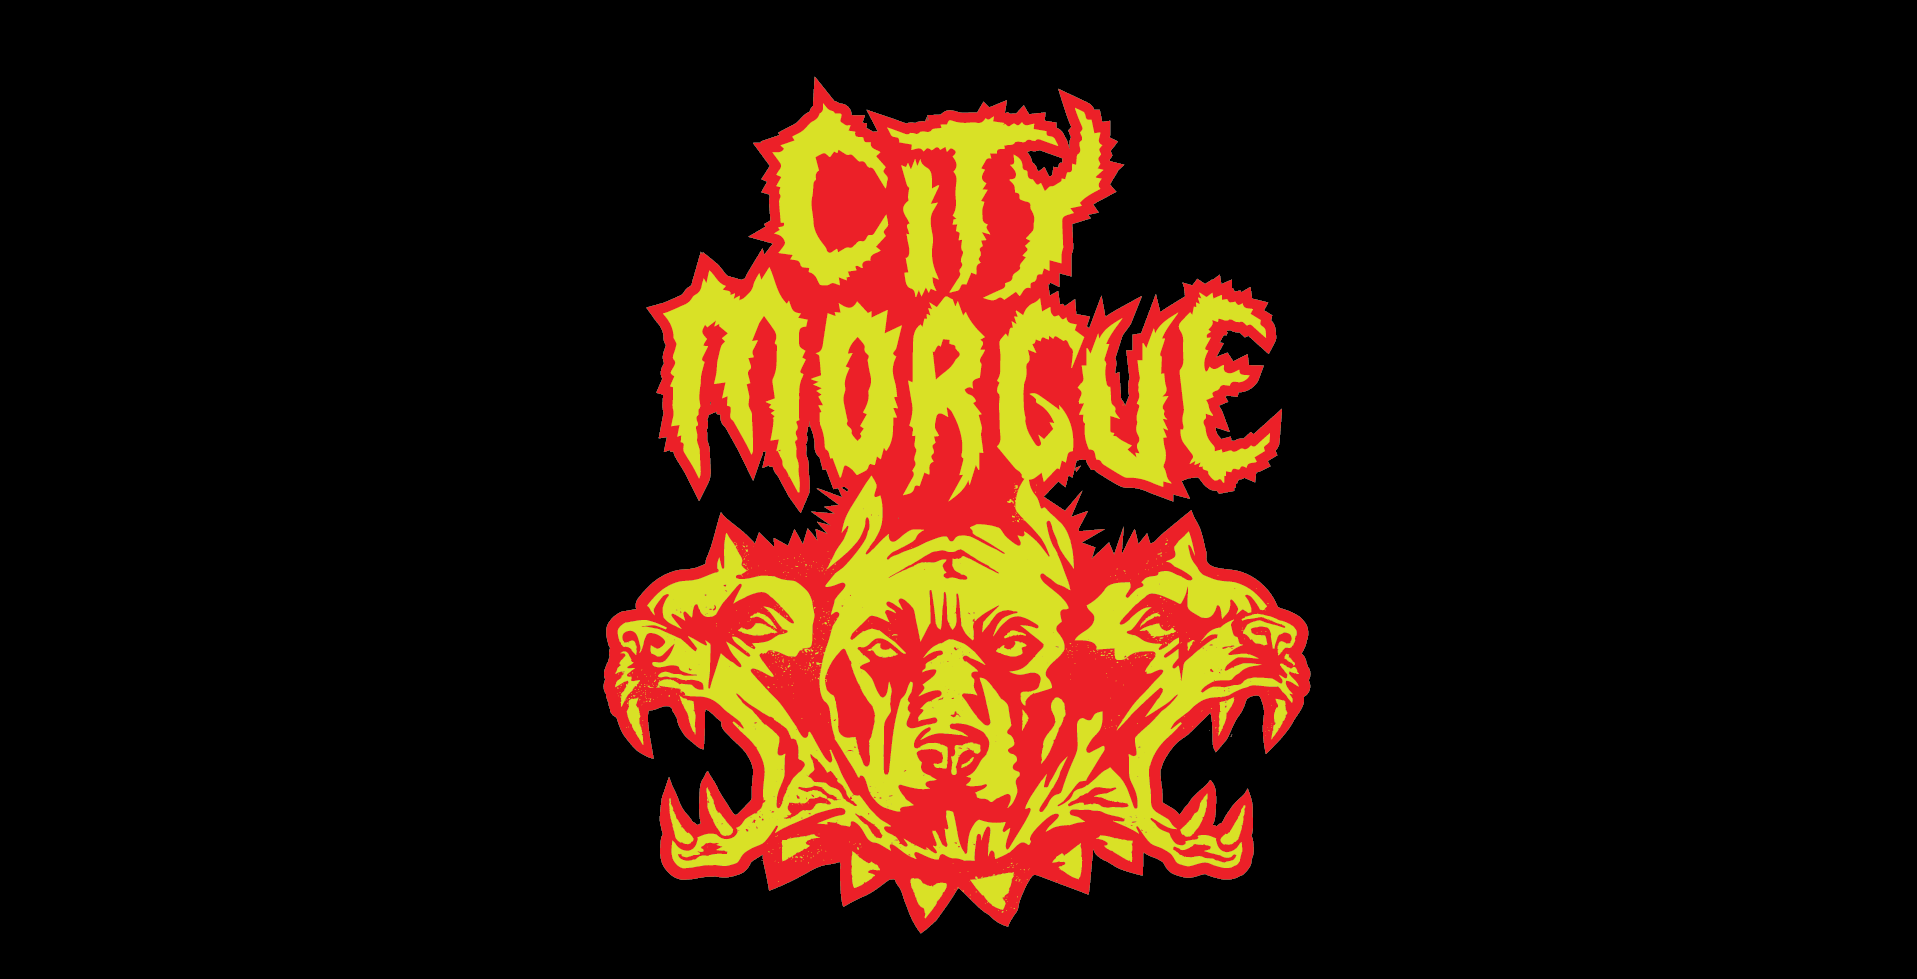 Avatar: City Morgue Merch